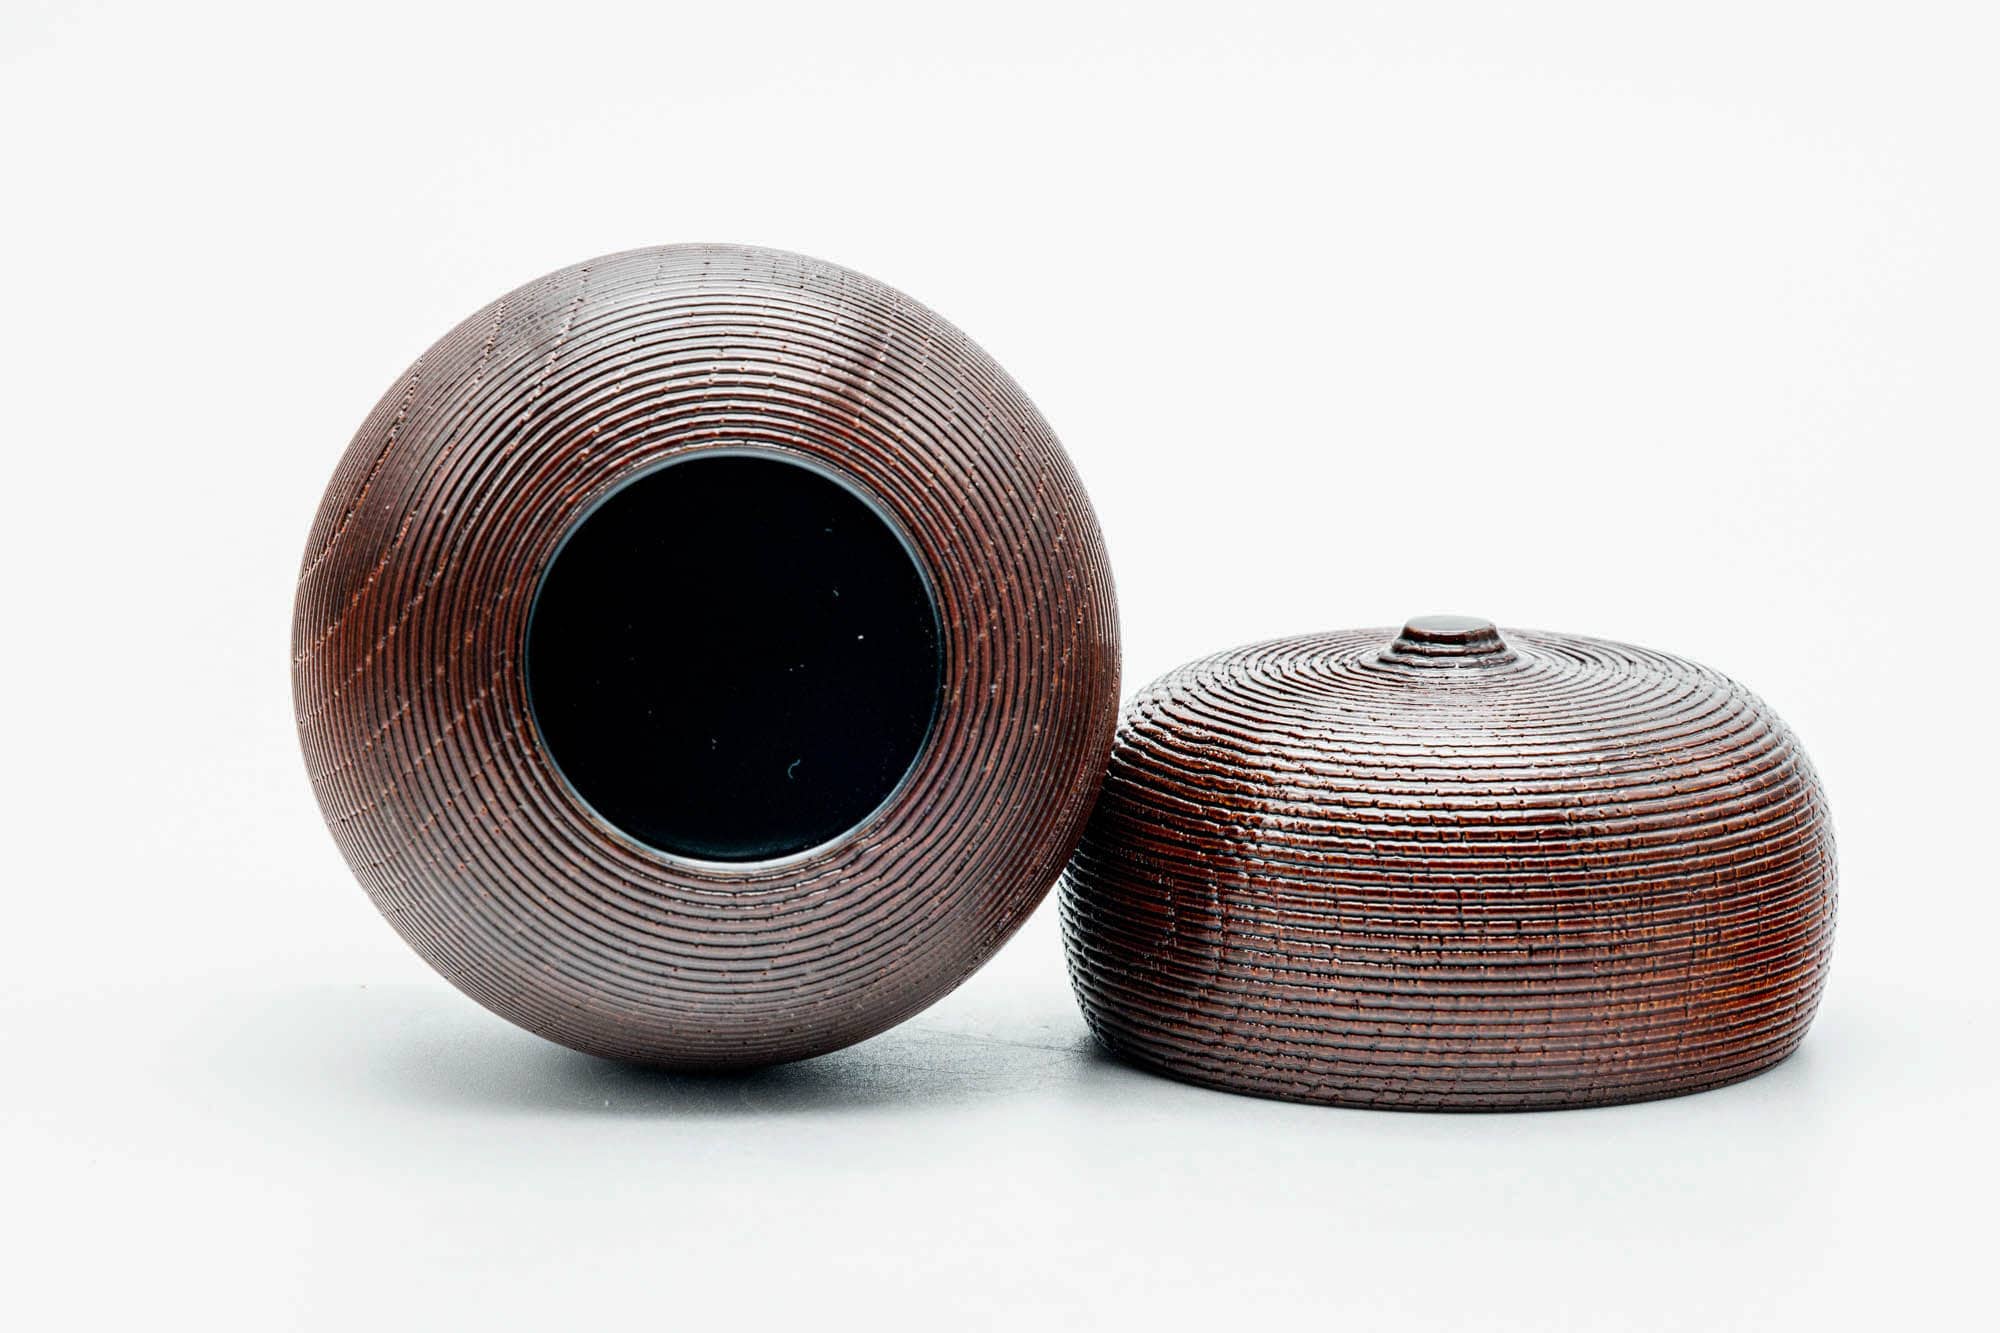 Japanese Usuchaki - Gourd Textured Wood Urushi Lacquer Matcha Tea Caddy - 90ml